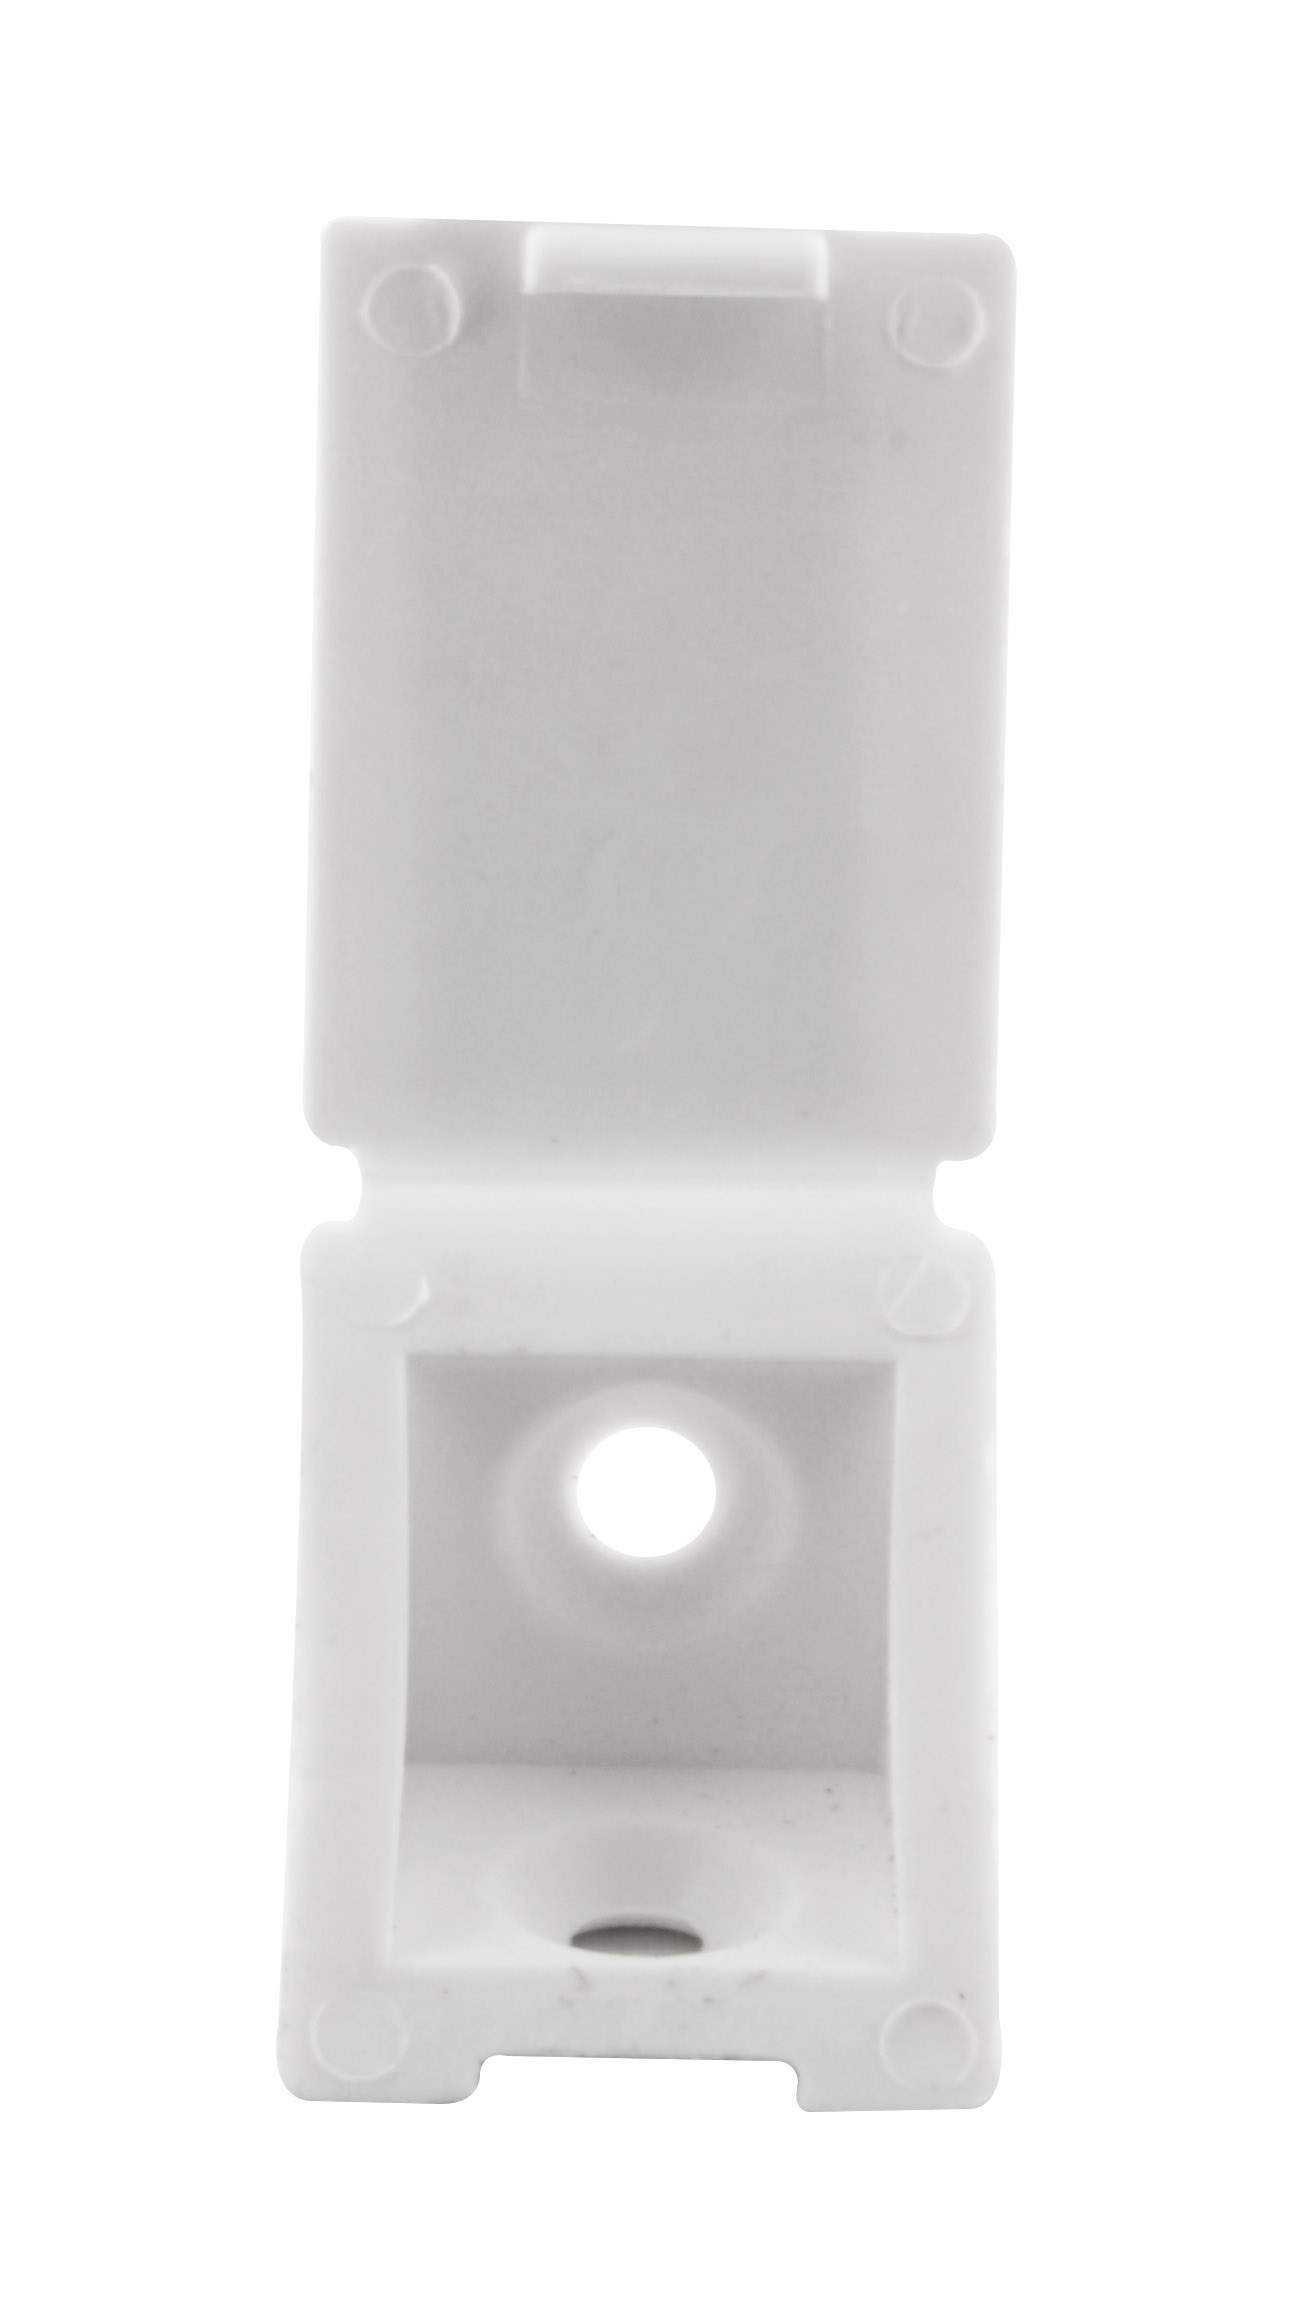 Taquet équerre simple, PVC blanc, L22xH22x23mm, 12 pièces.